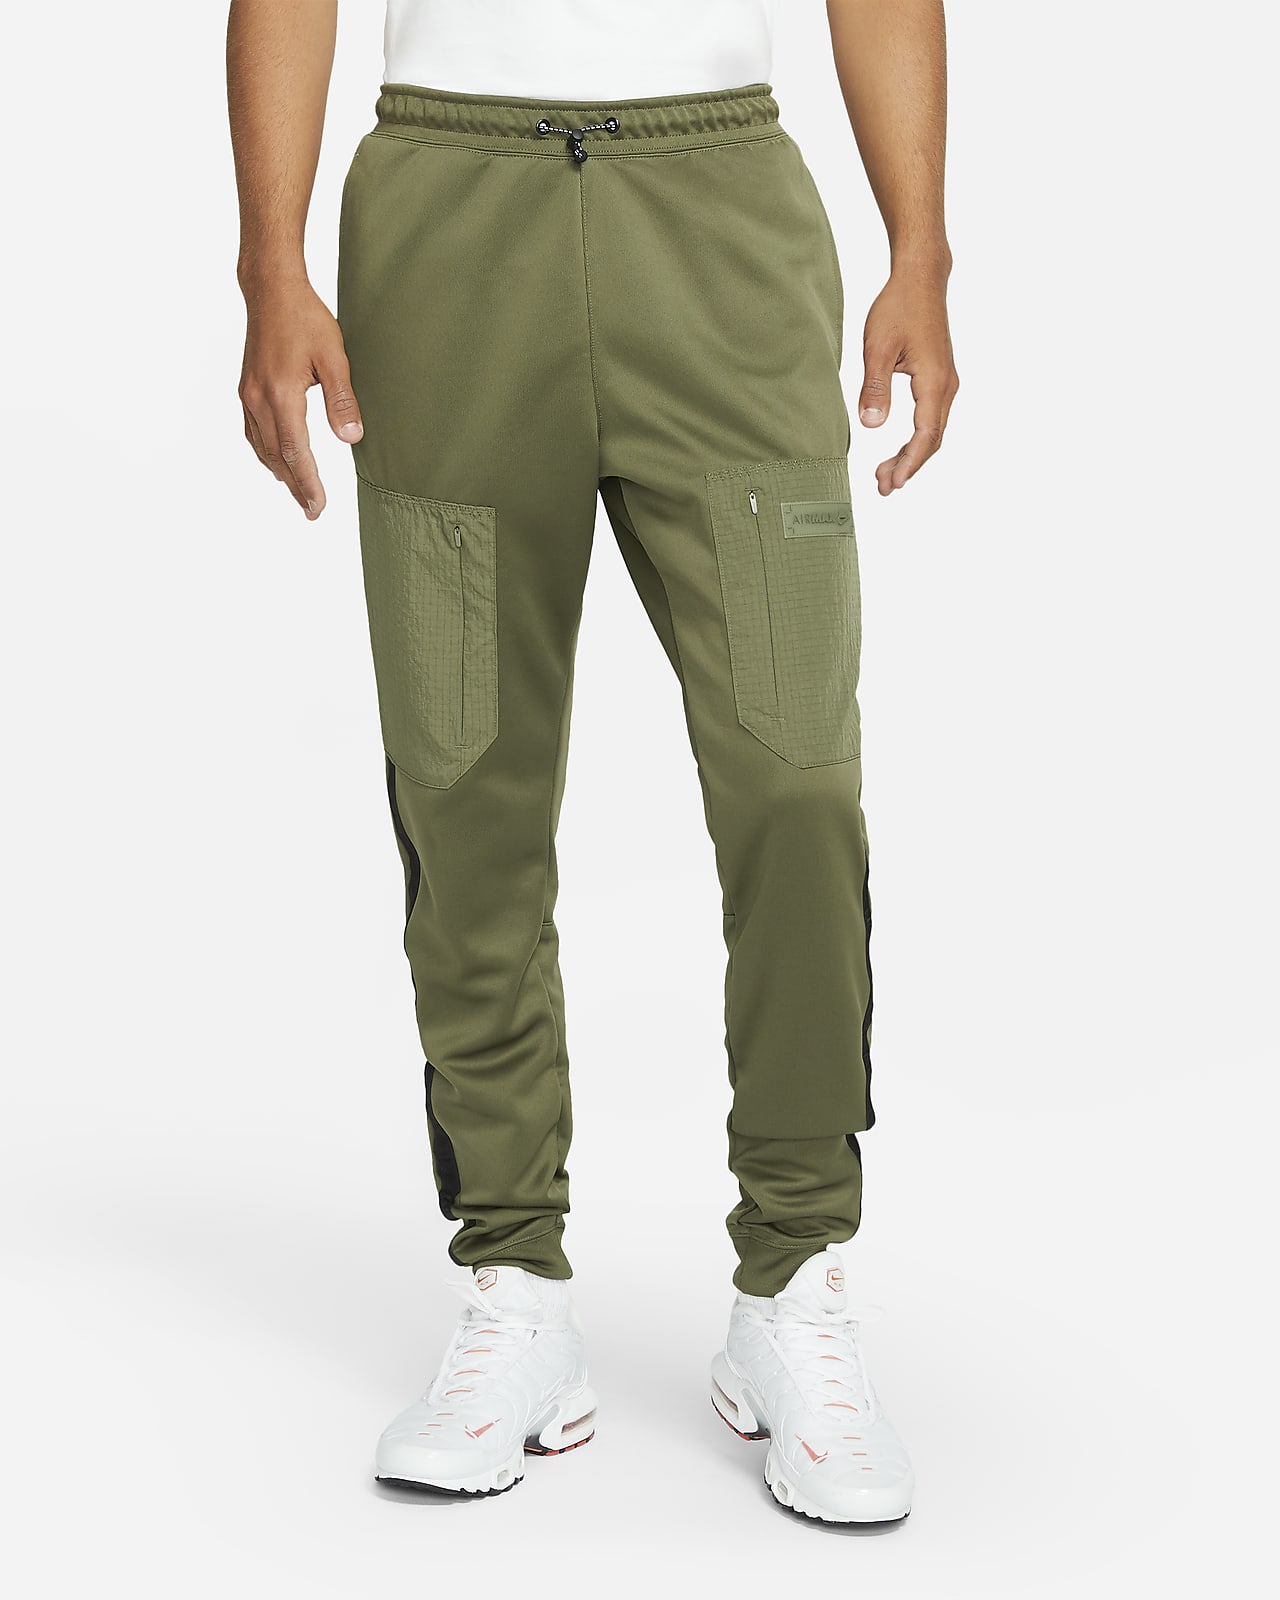 men's nike sportswear air max utility jogger pants